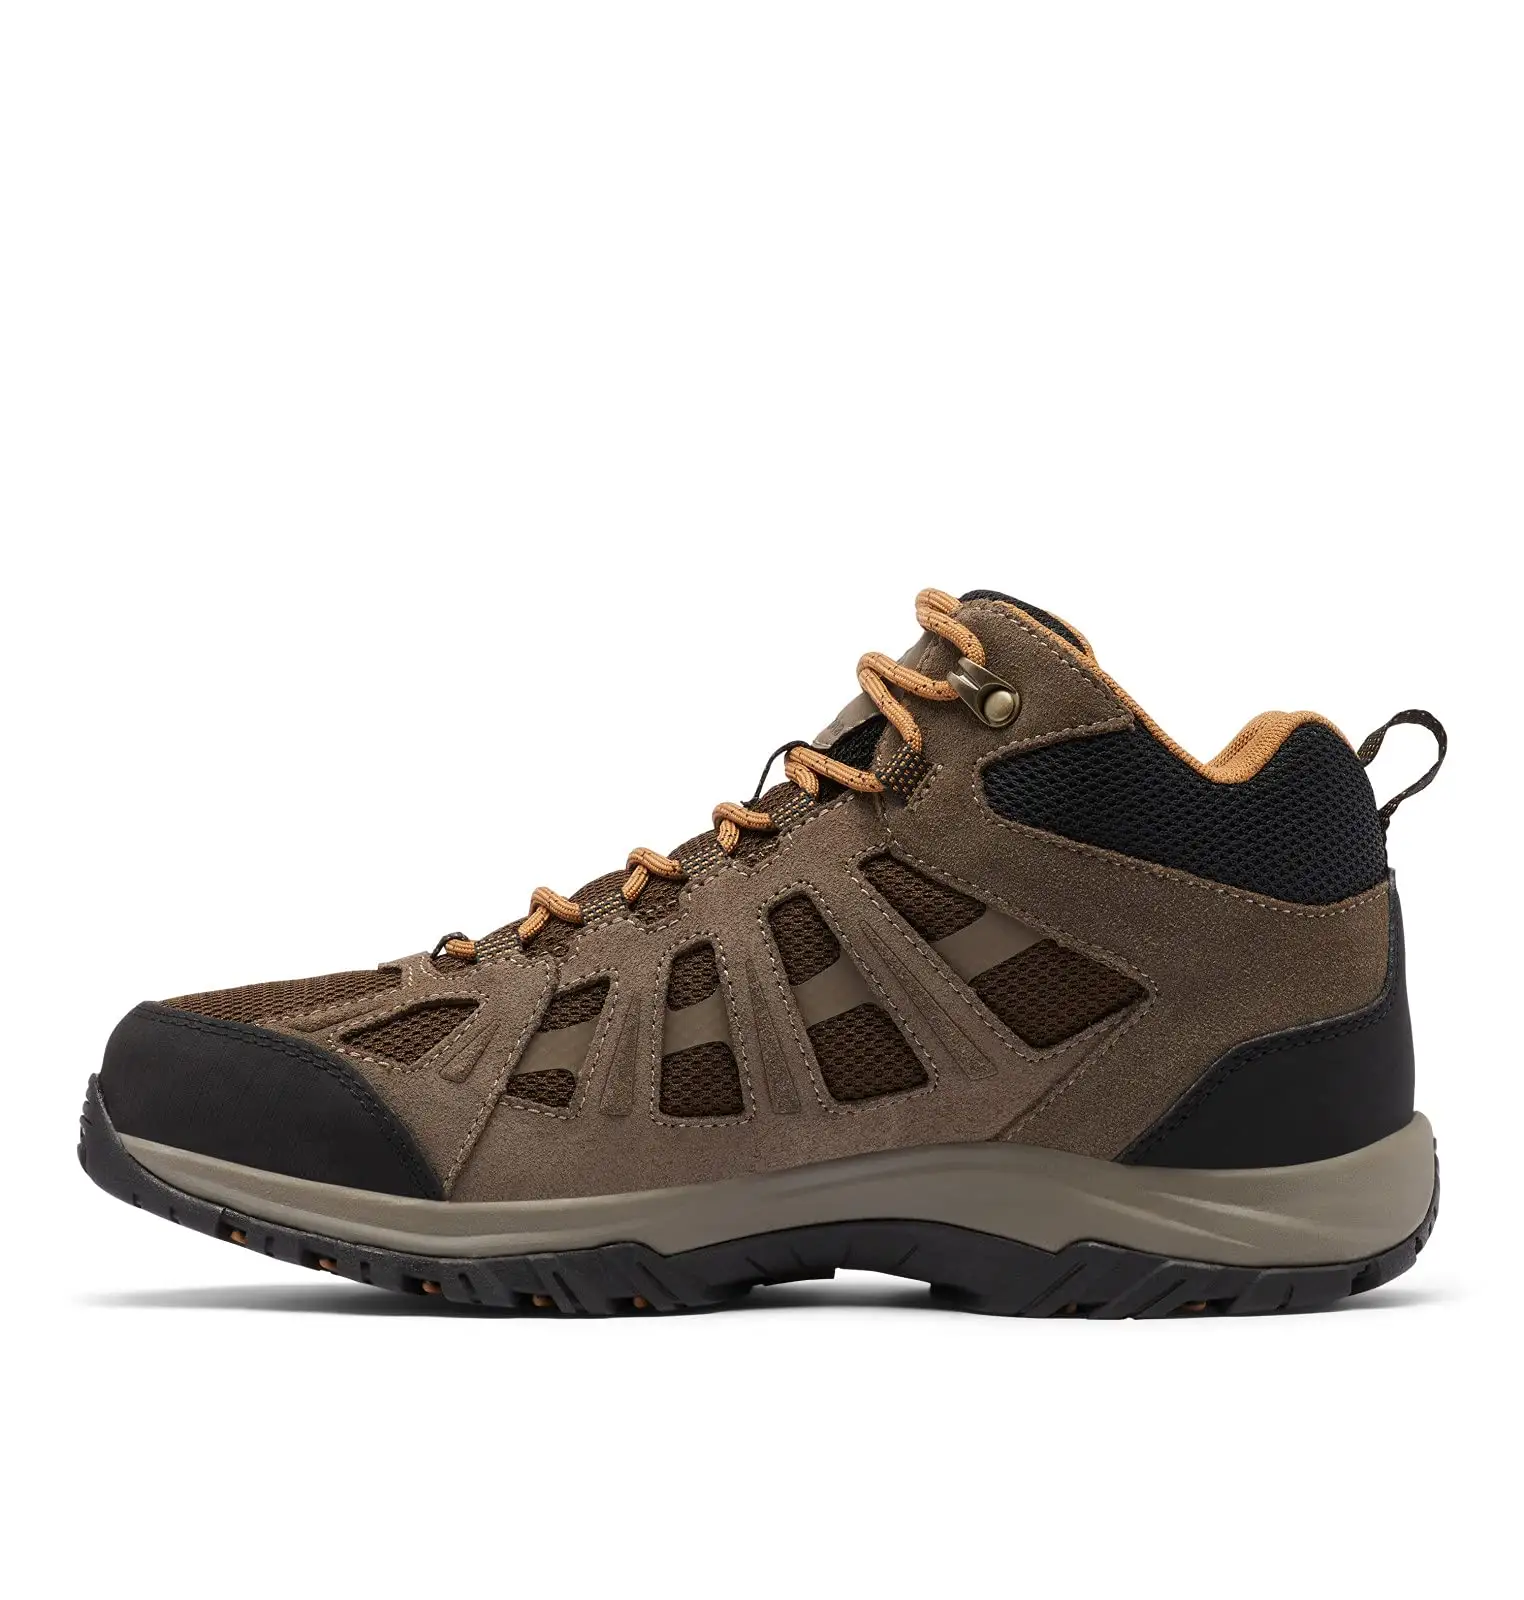 New arrivals Custom waterproof men hiking shoe outdoor camping sport hiking shoe for men women